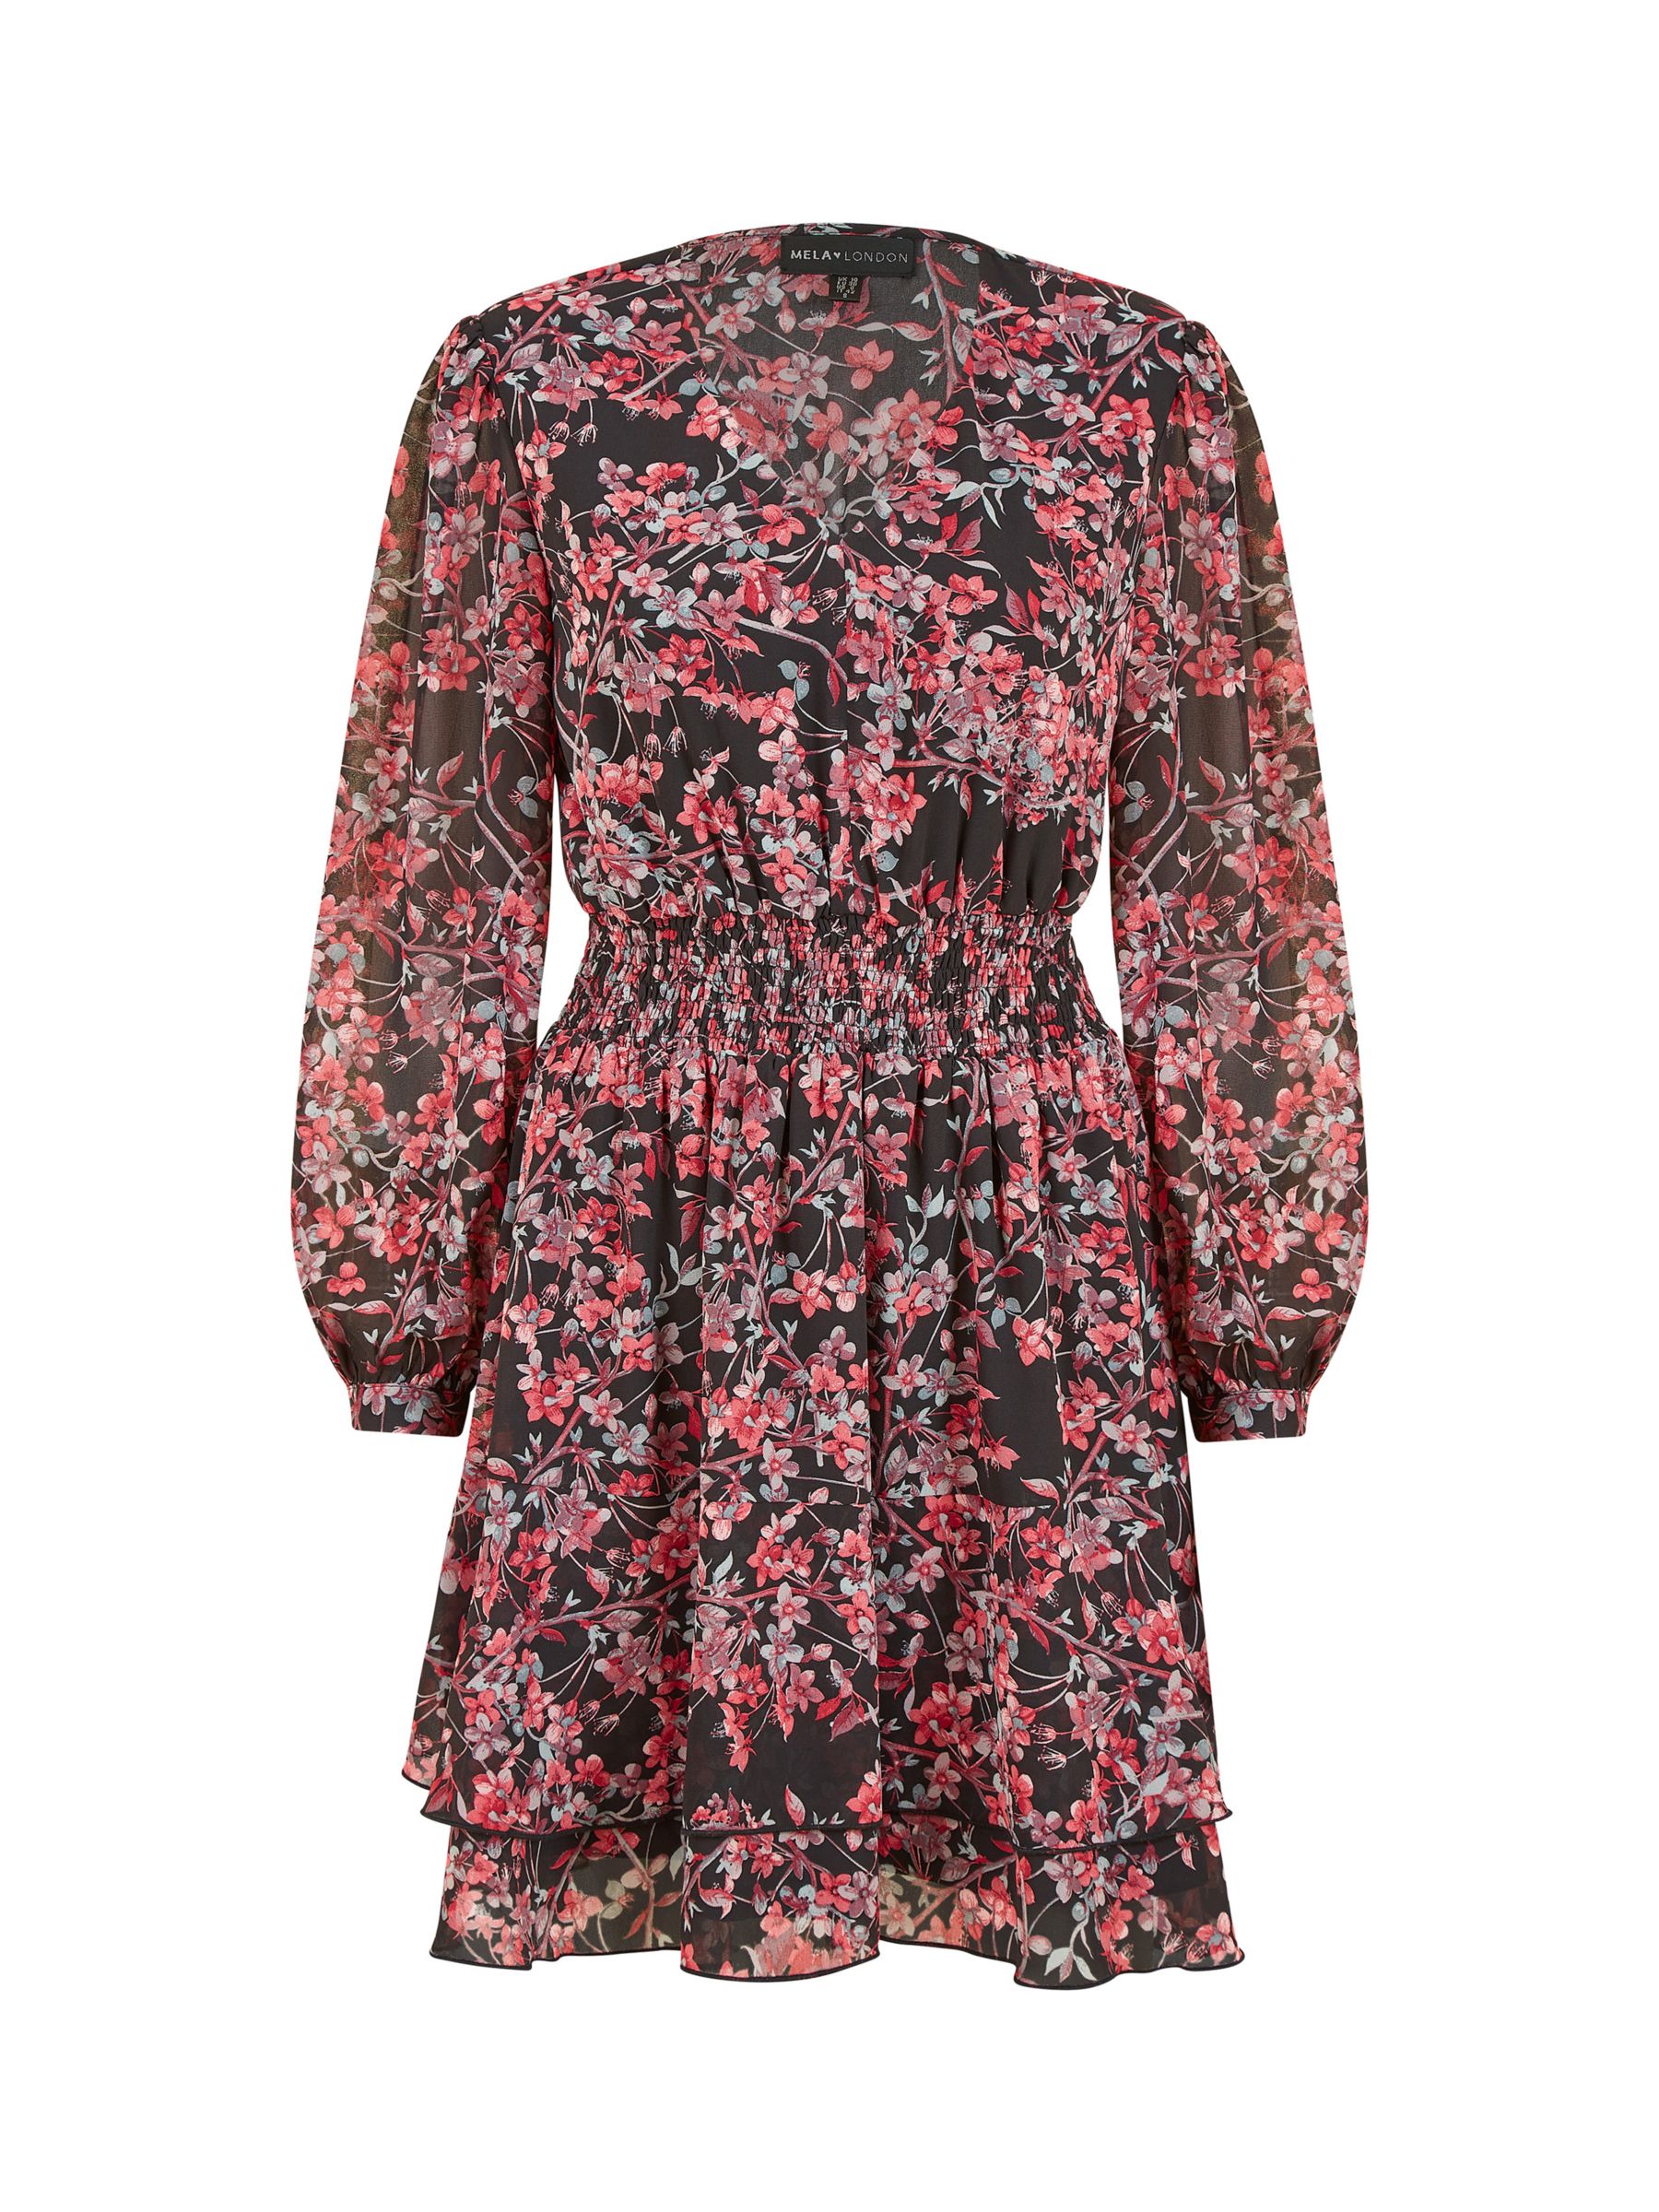 Mela London Blossom Ruffle Mini Dress, Black at John Lewis & Partners